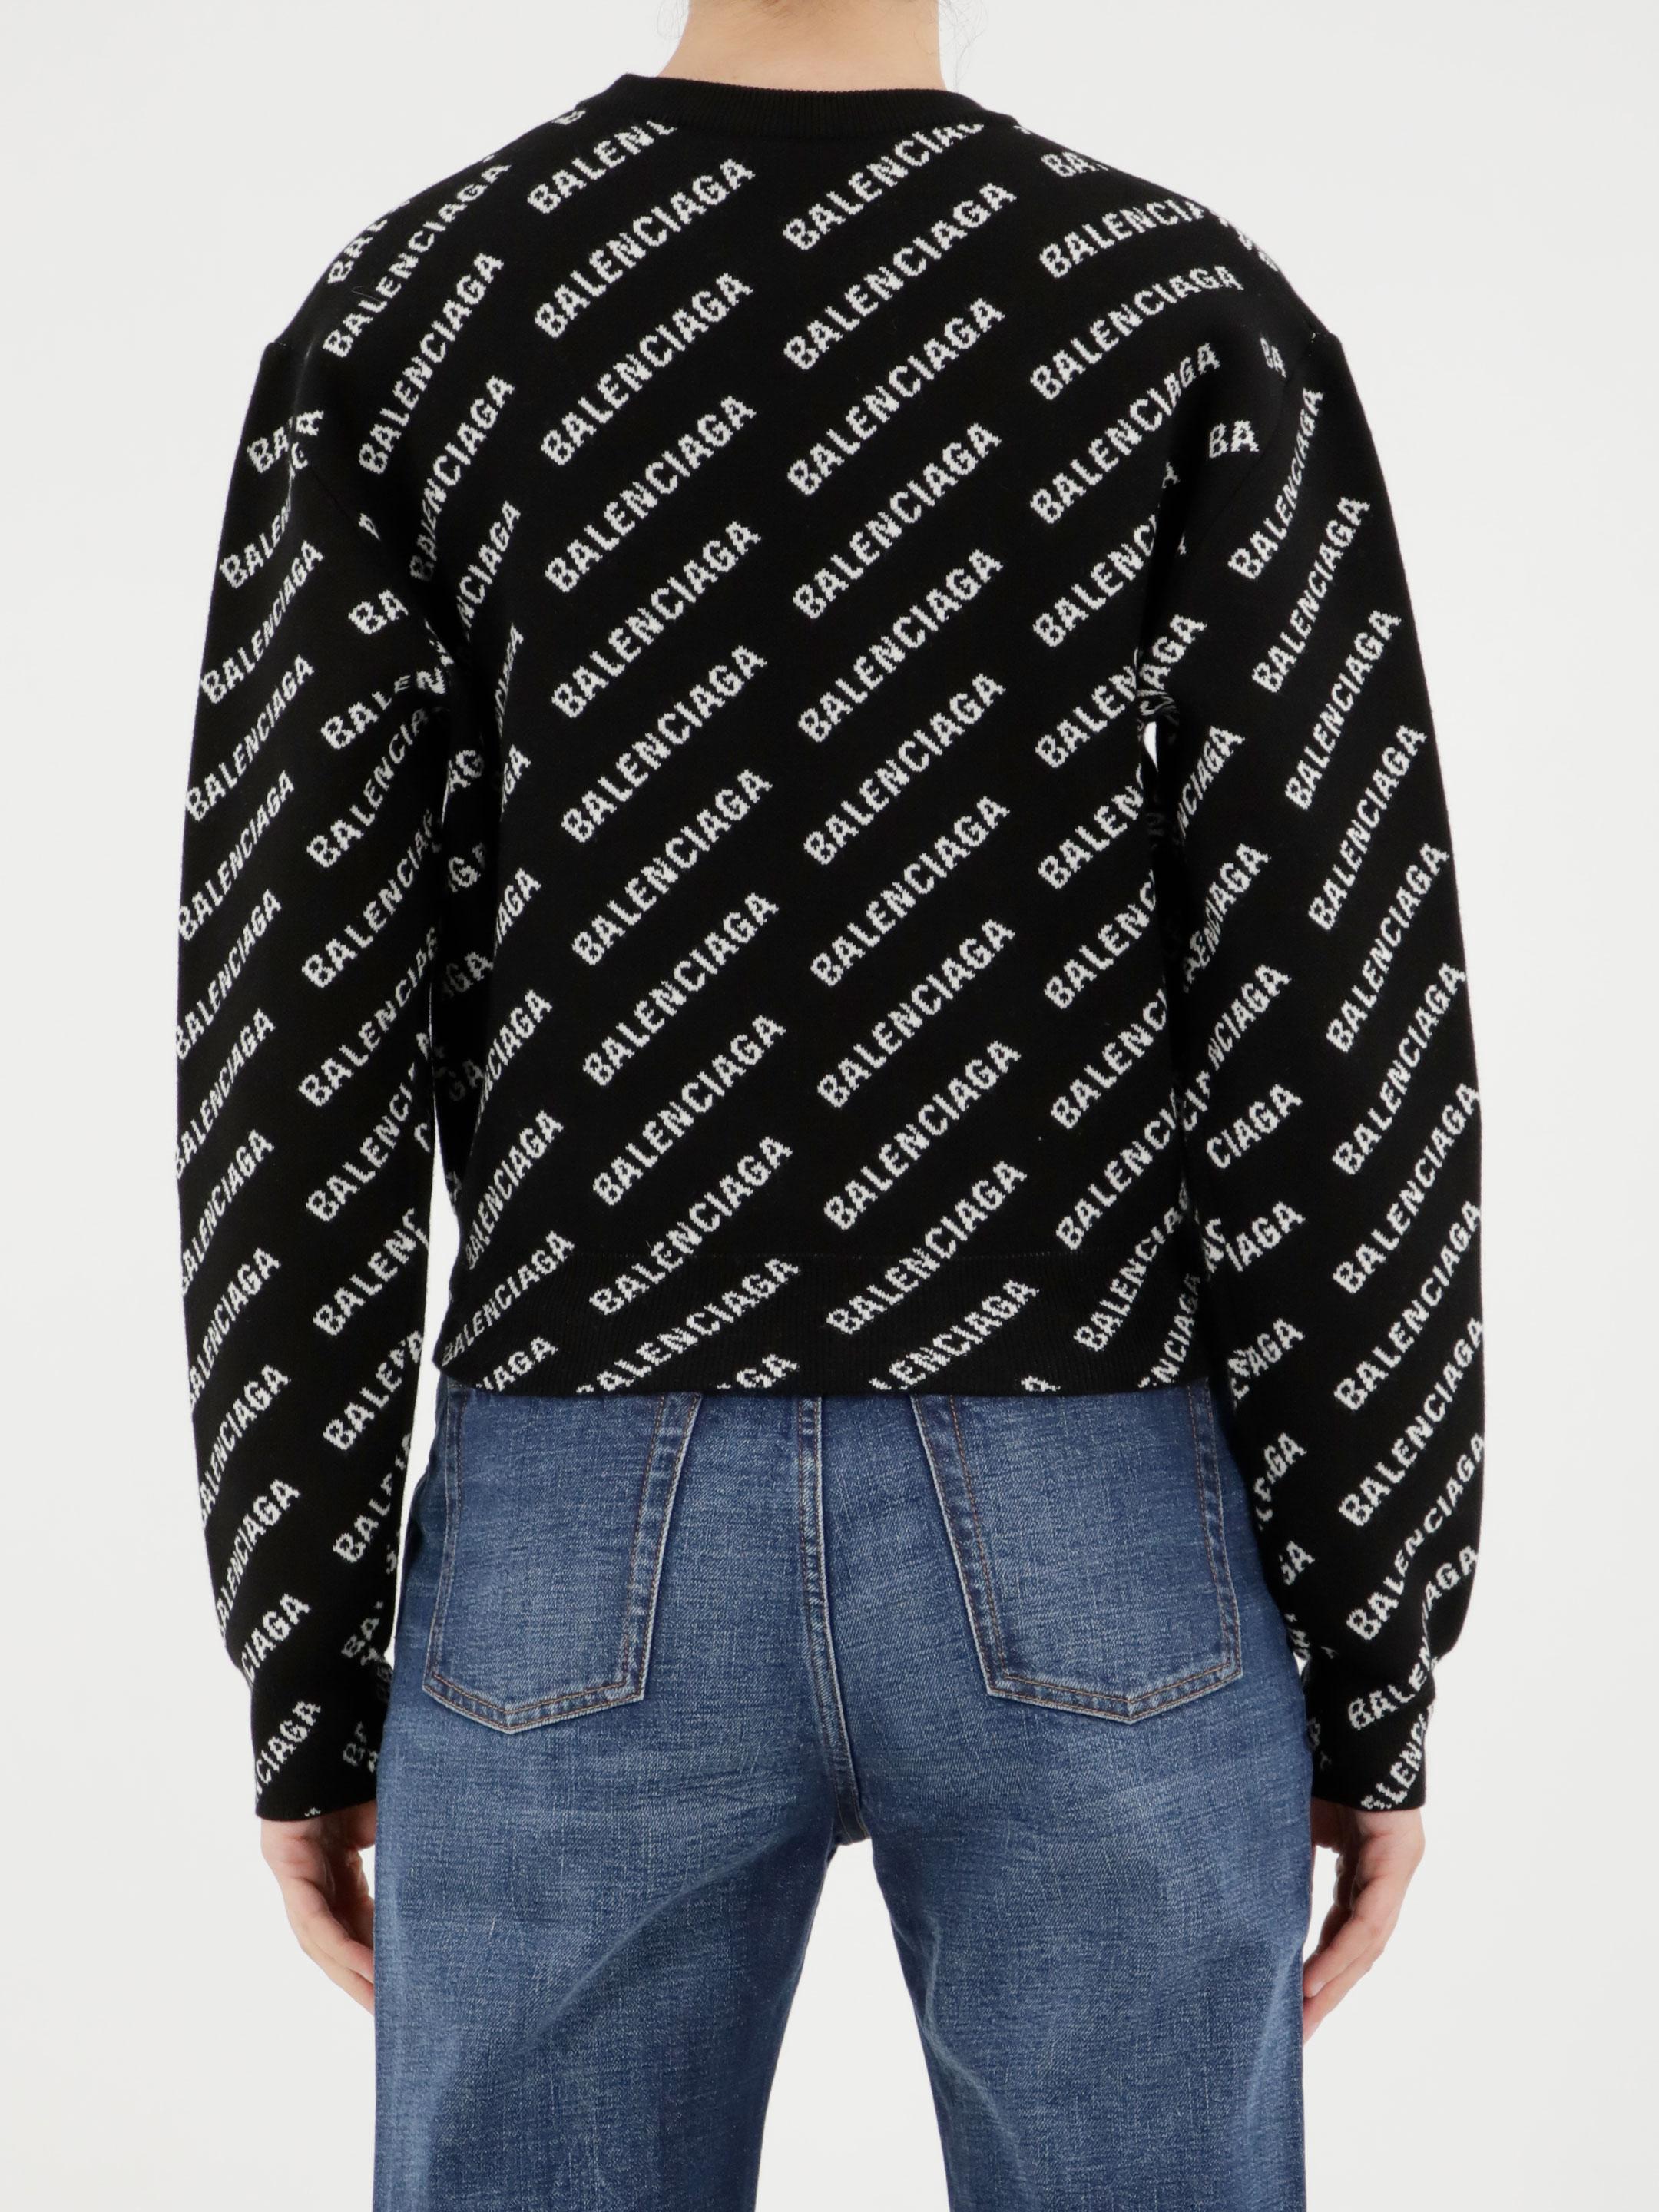 Balenciaga Mini Pullover With Logo in Black/White (Black) - Save 46% | Lyst